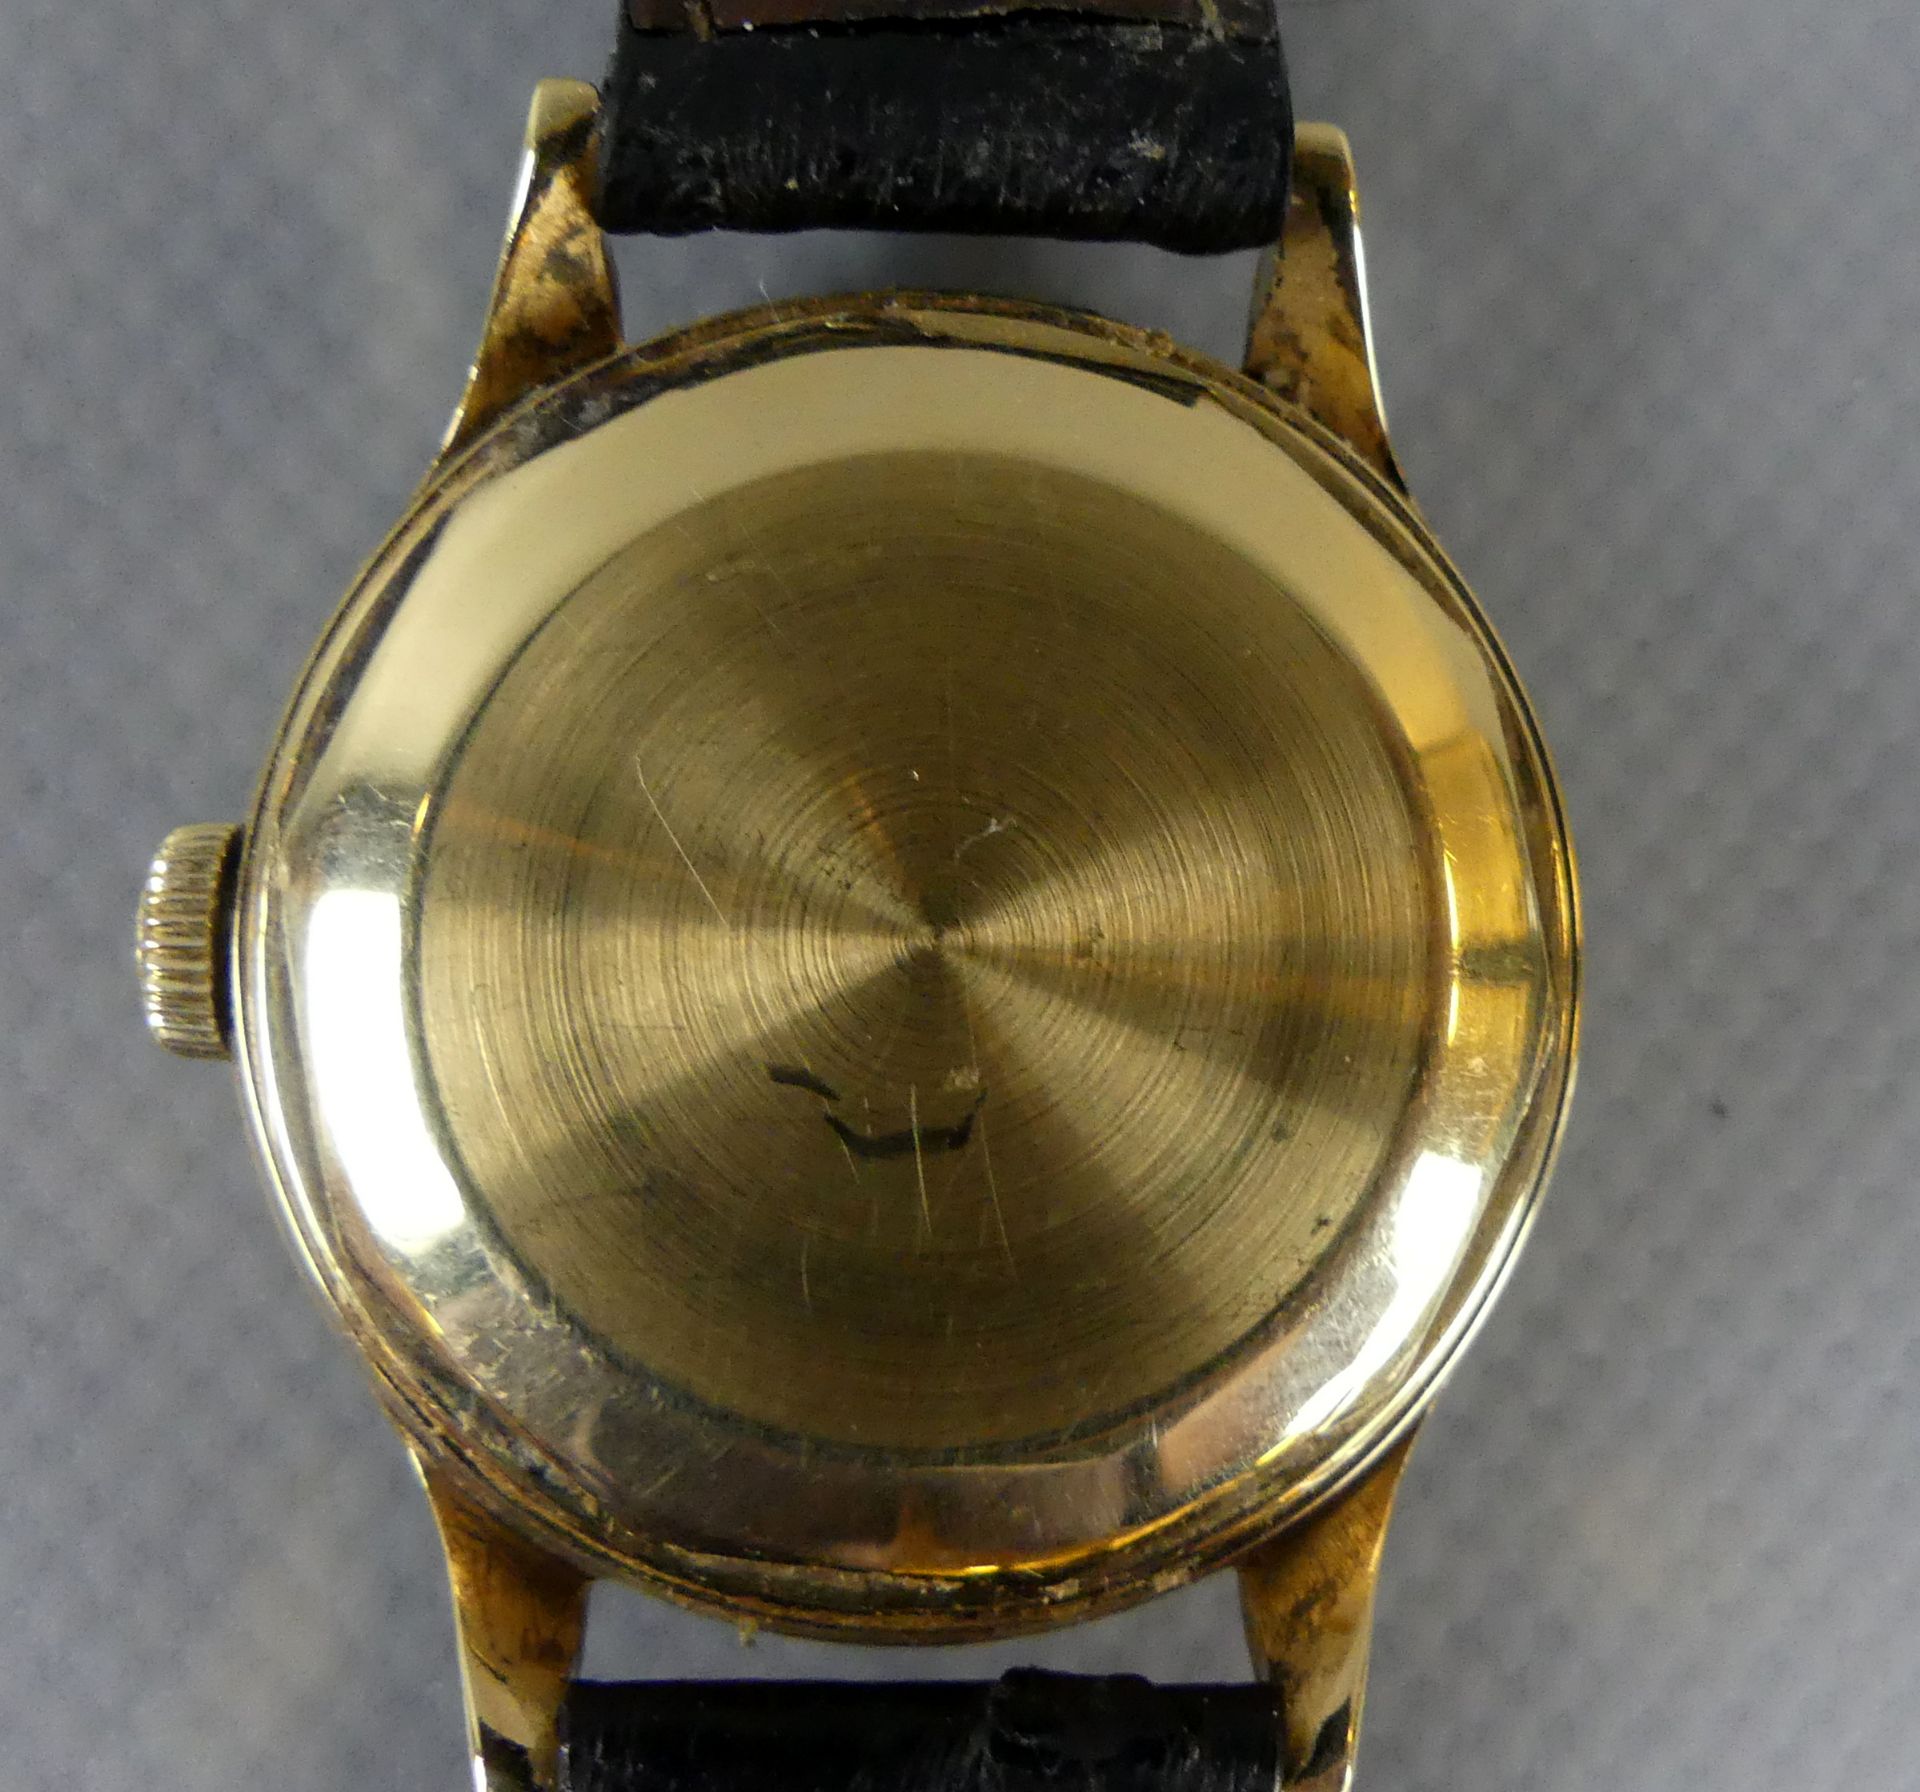 Herren Armband Uhr, "Mido", 14 ct. Gold, um 1970, Automatik, - Bild 3 aus 3